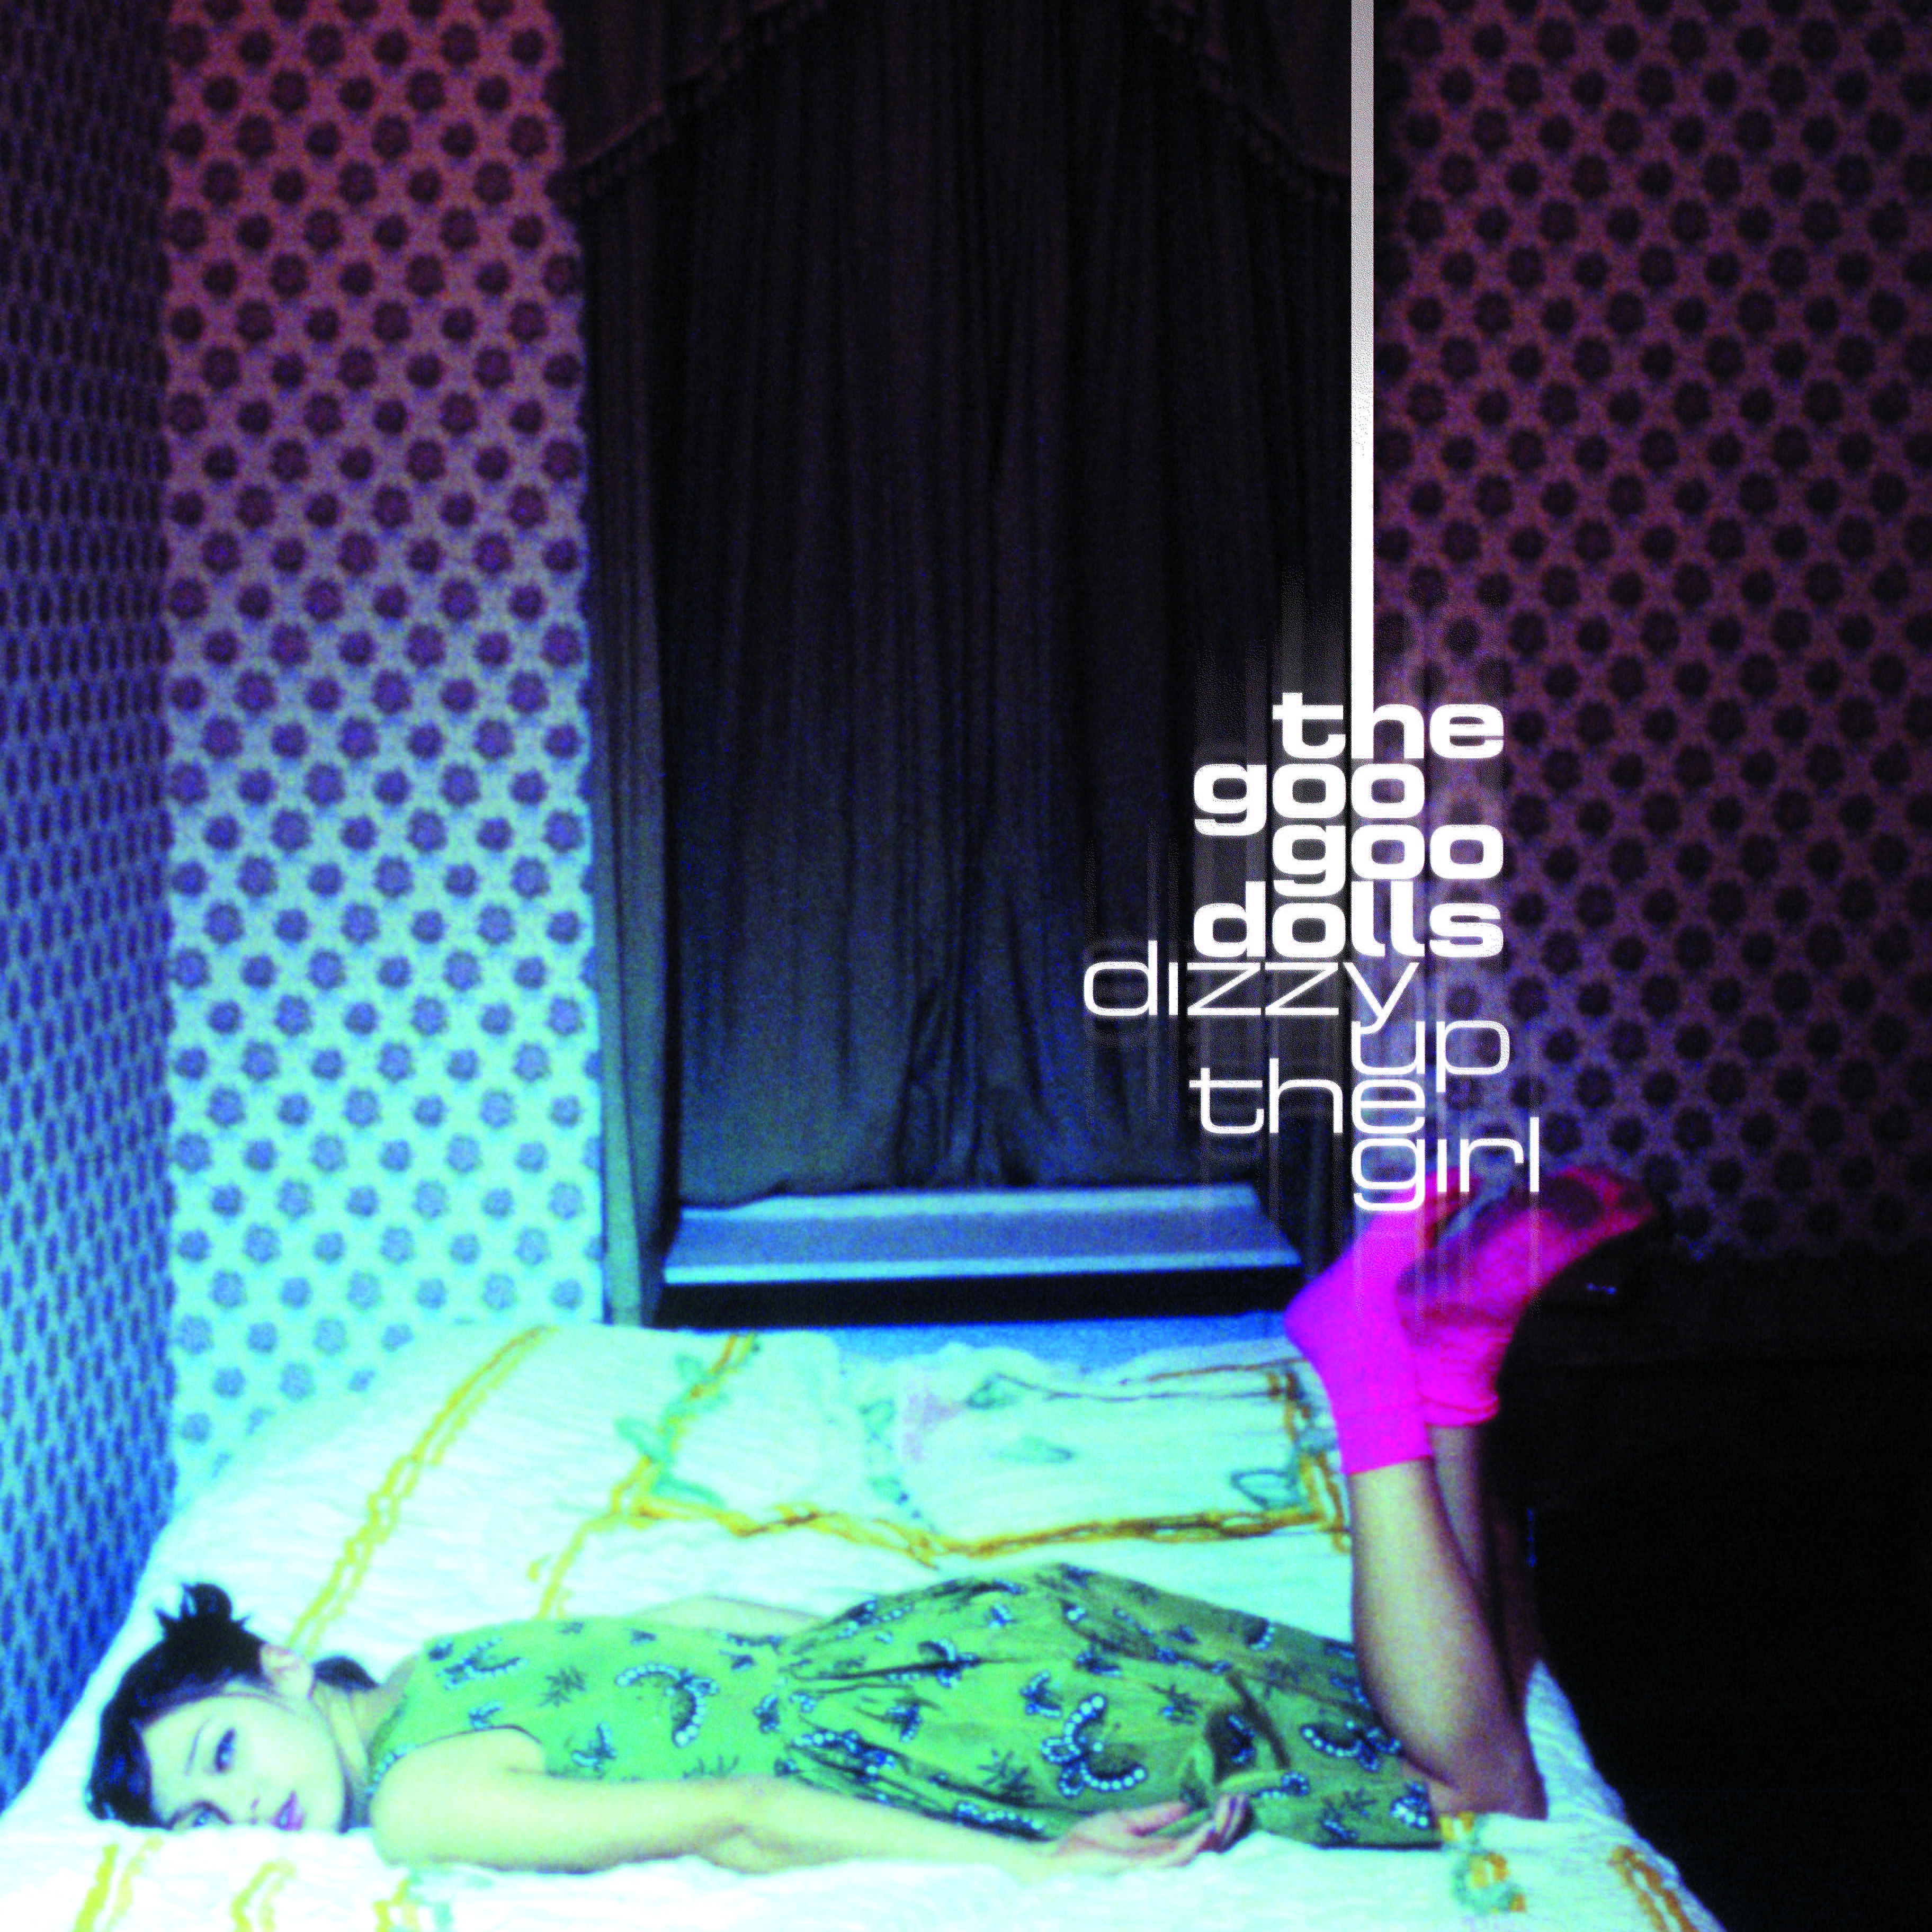 Goo Goo Dolls Dizzy Up the Girl (Vinyl) - Picture 1 of 1